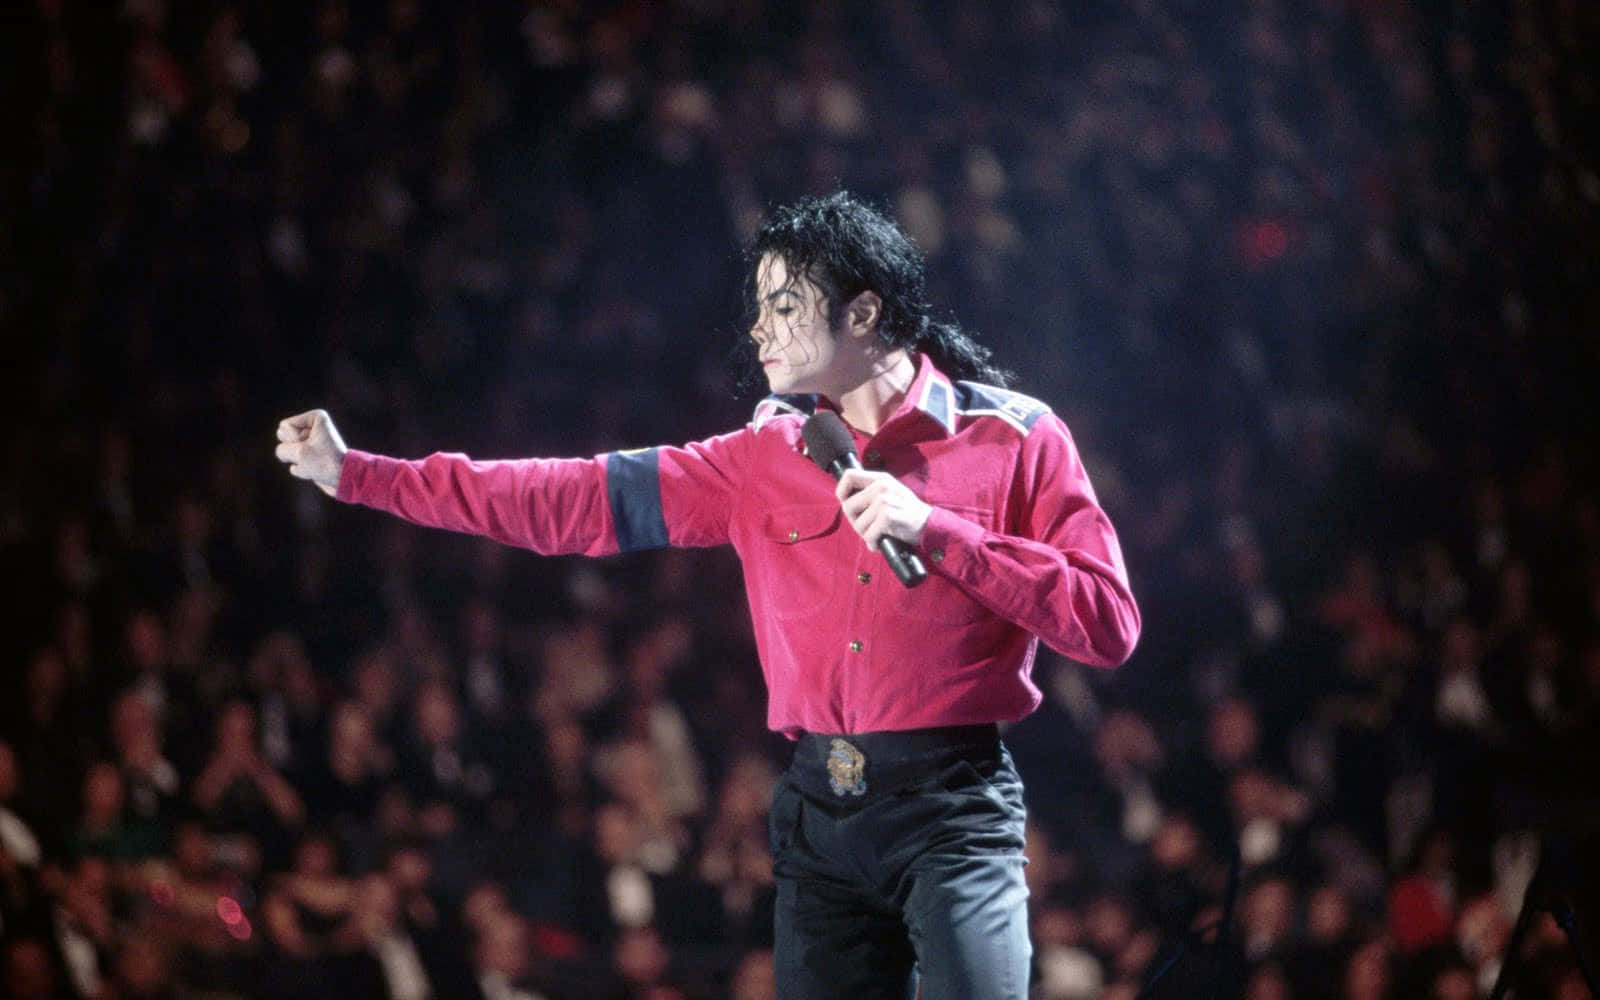 Unaperformance Leggendaria Di Michael Jackson Sul Palco